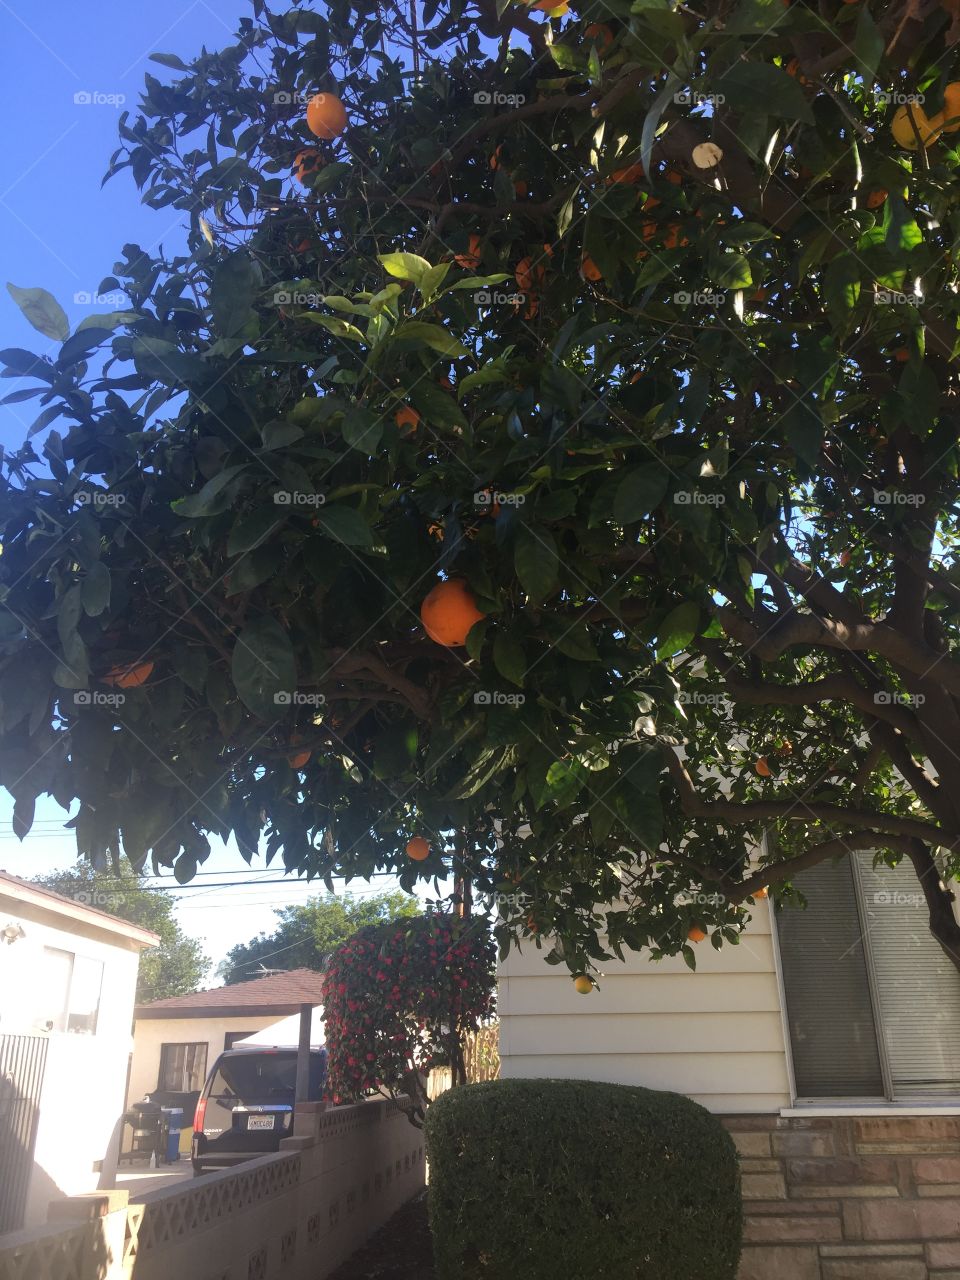 California orange tree
